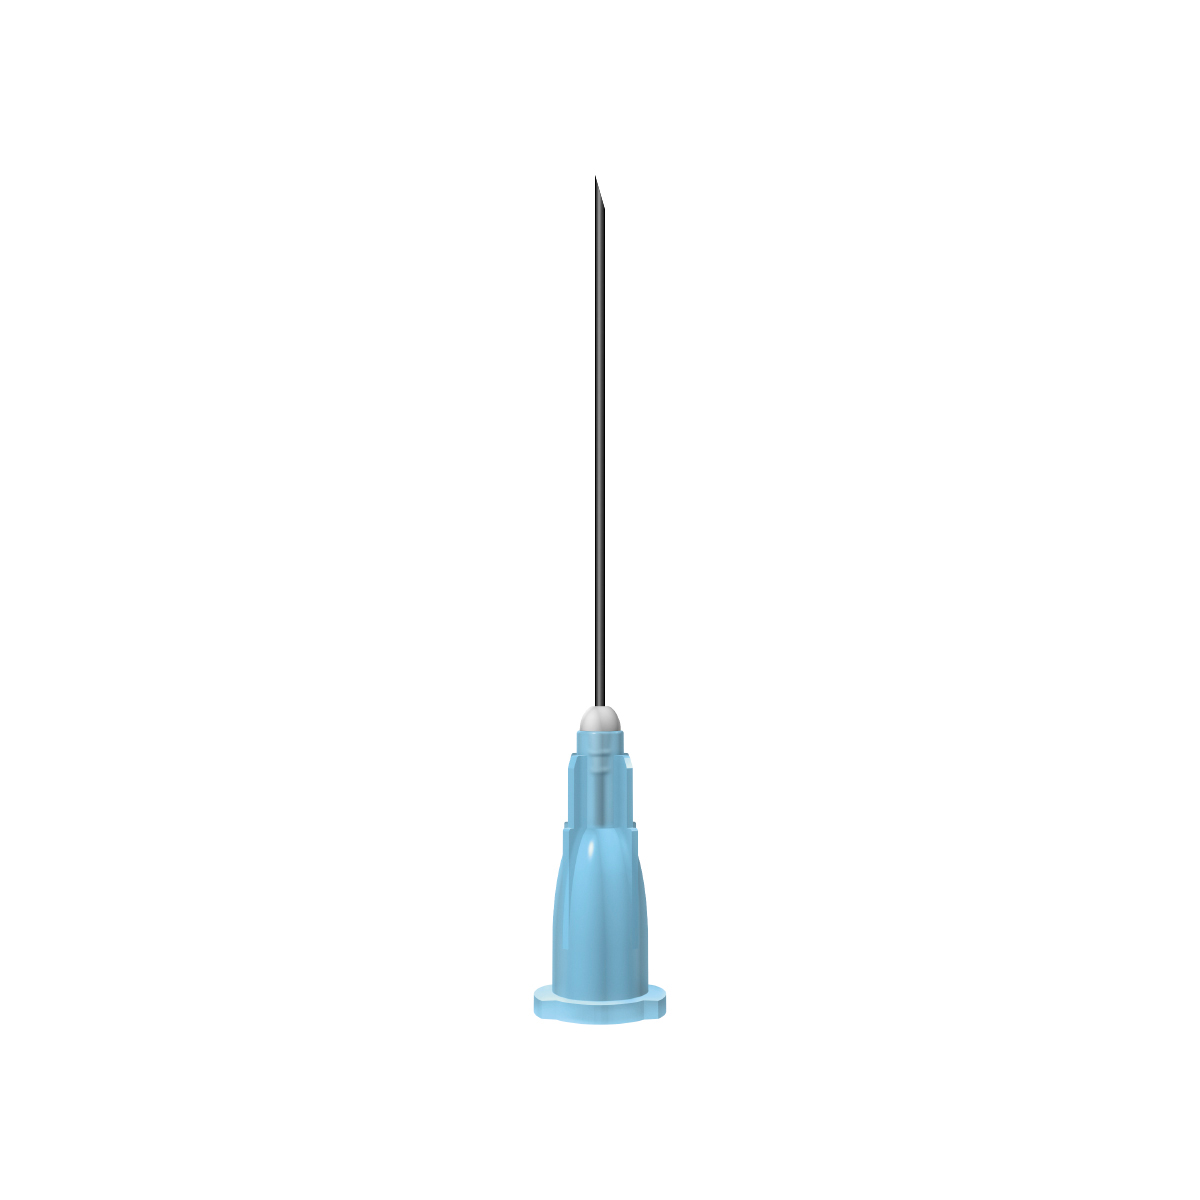 Unisharp: Blue 23G 32mm (1¼  inch) needle